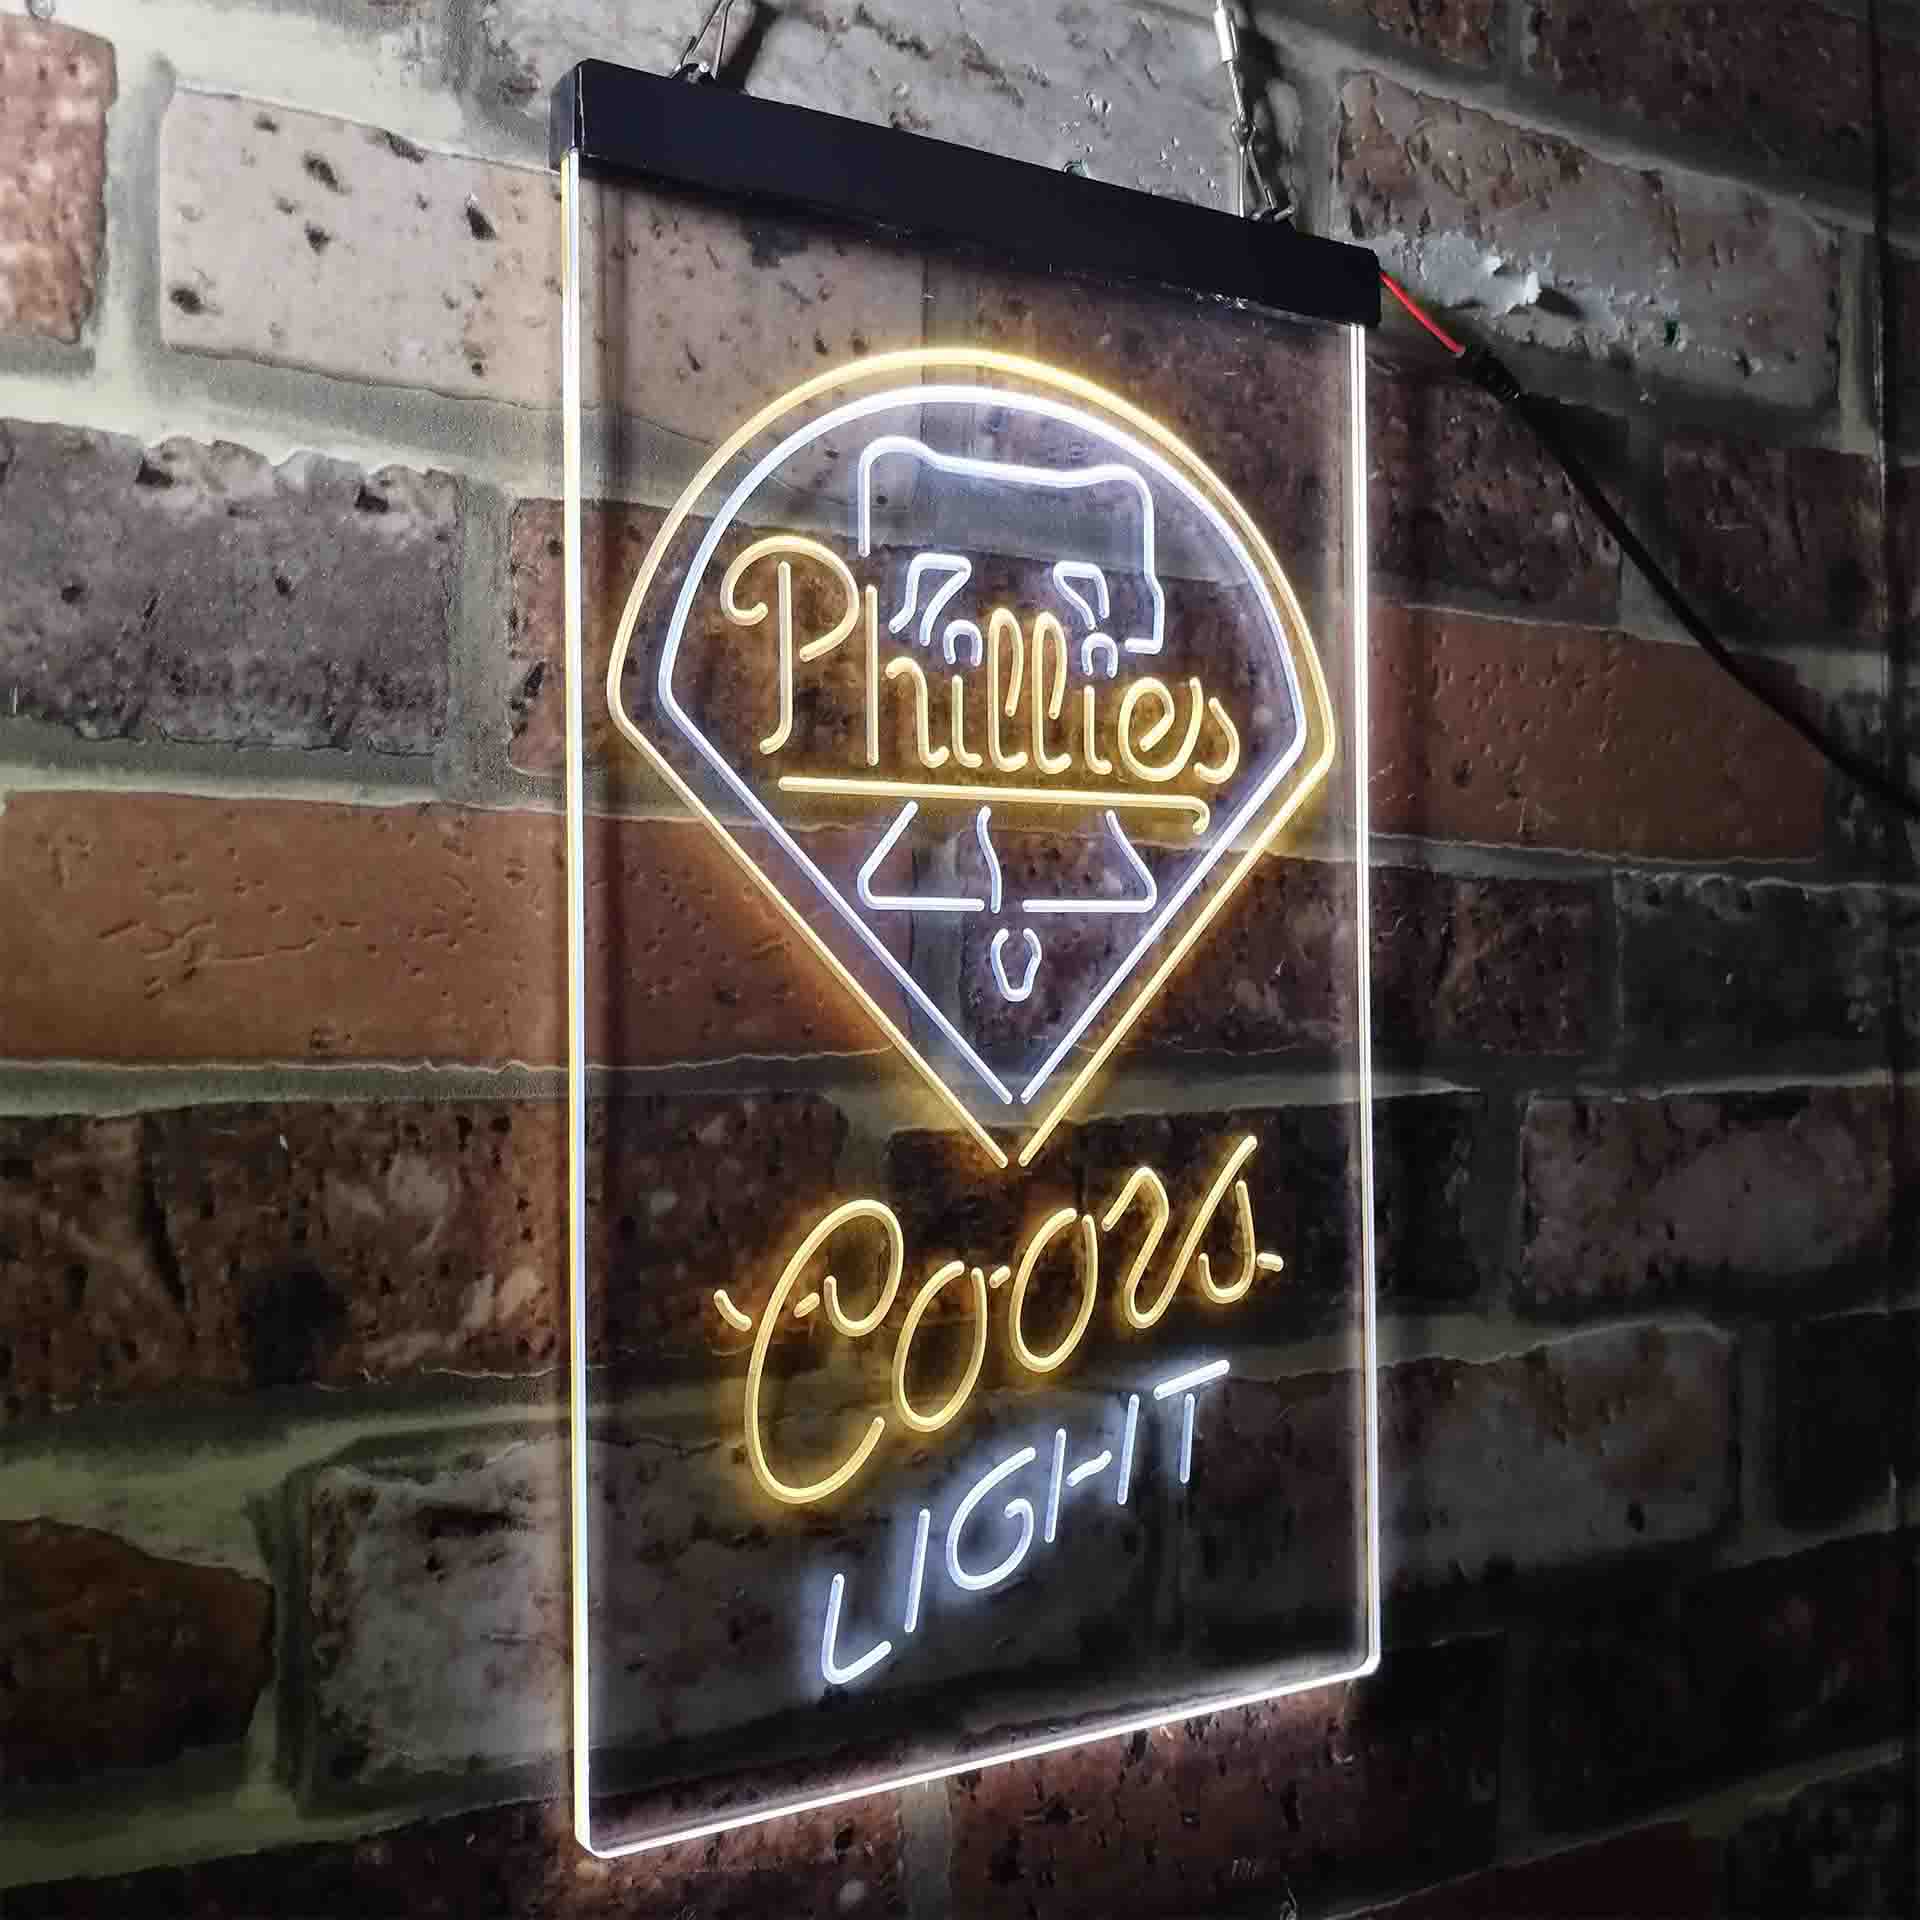 Philadelphia Phillies Coors Light Neon-Like LED Sign